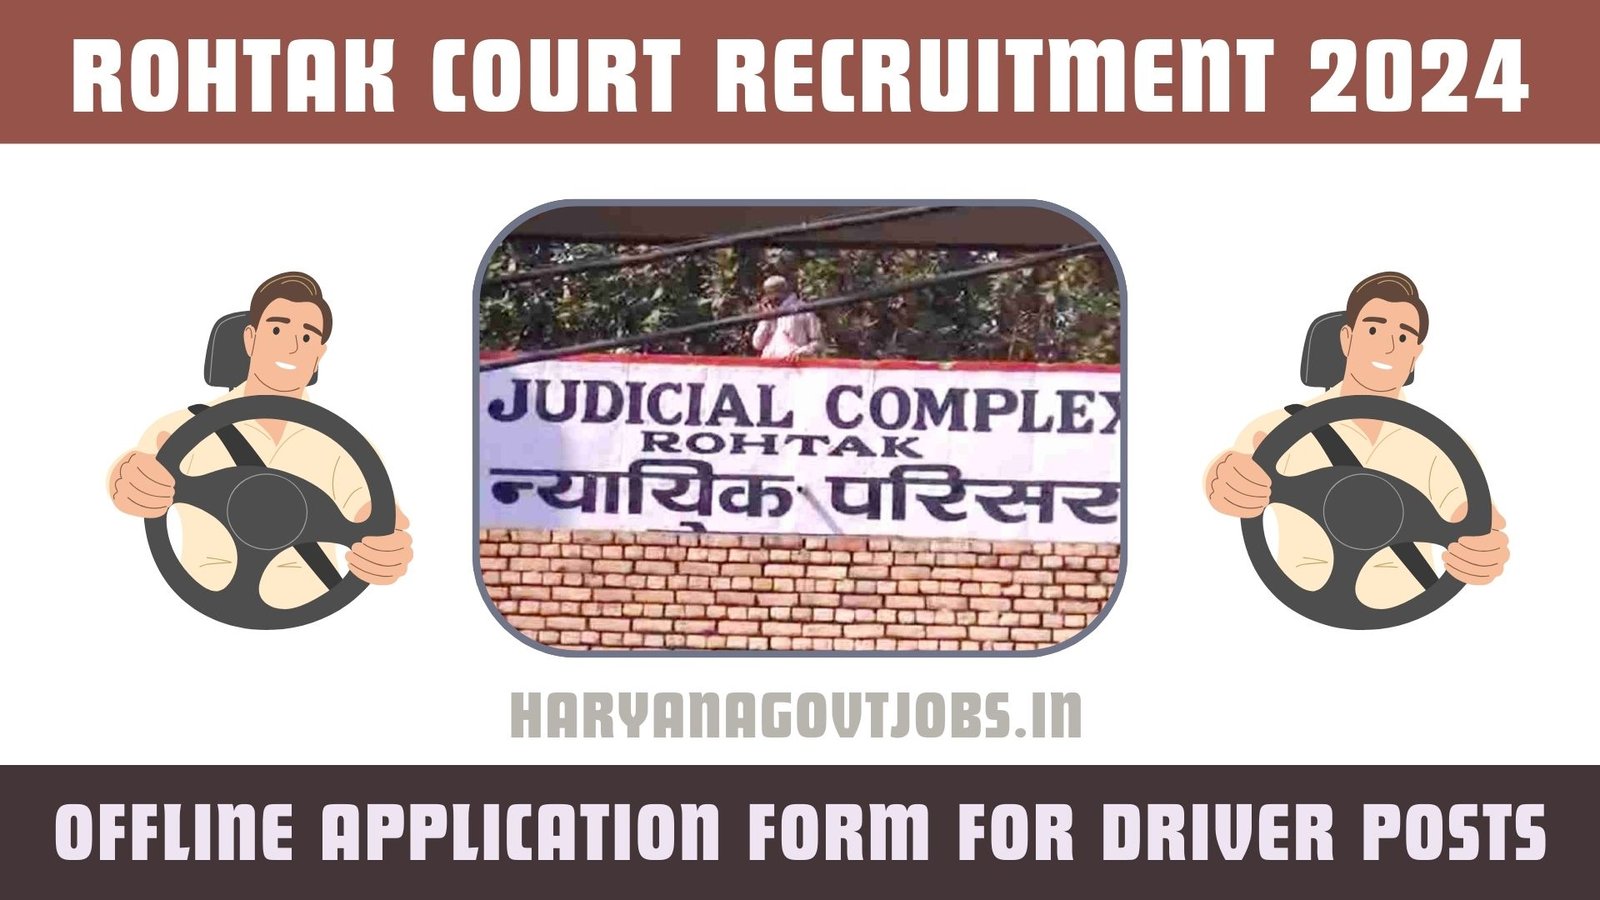 Rohtak Court Recruitment 2024 Short Information